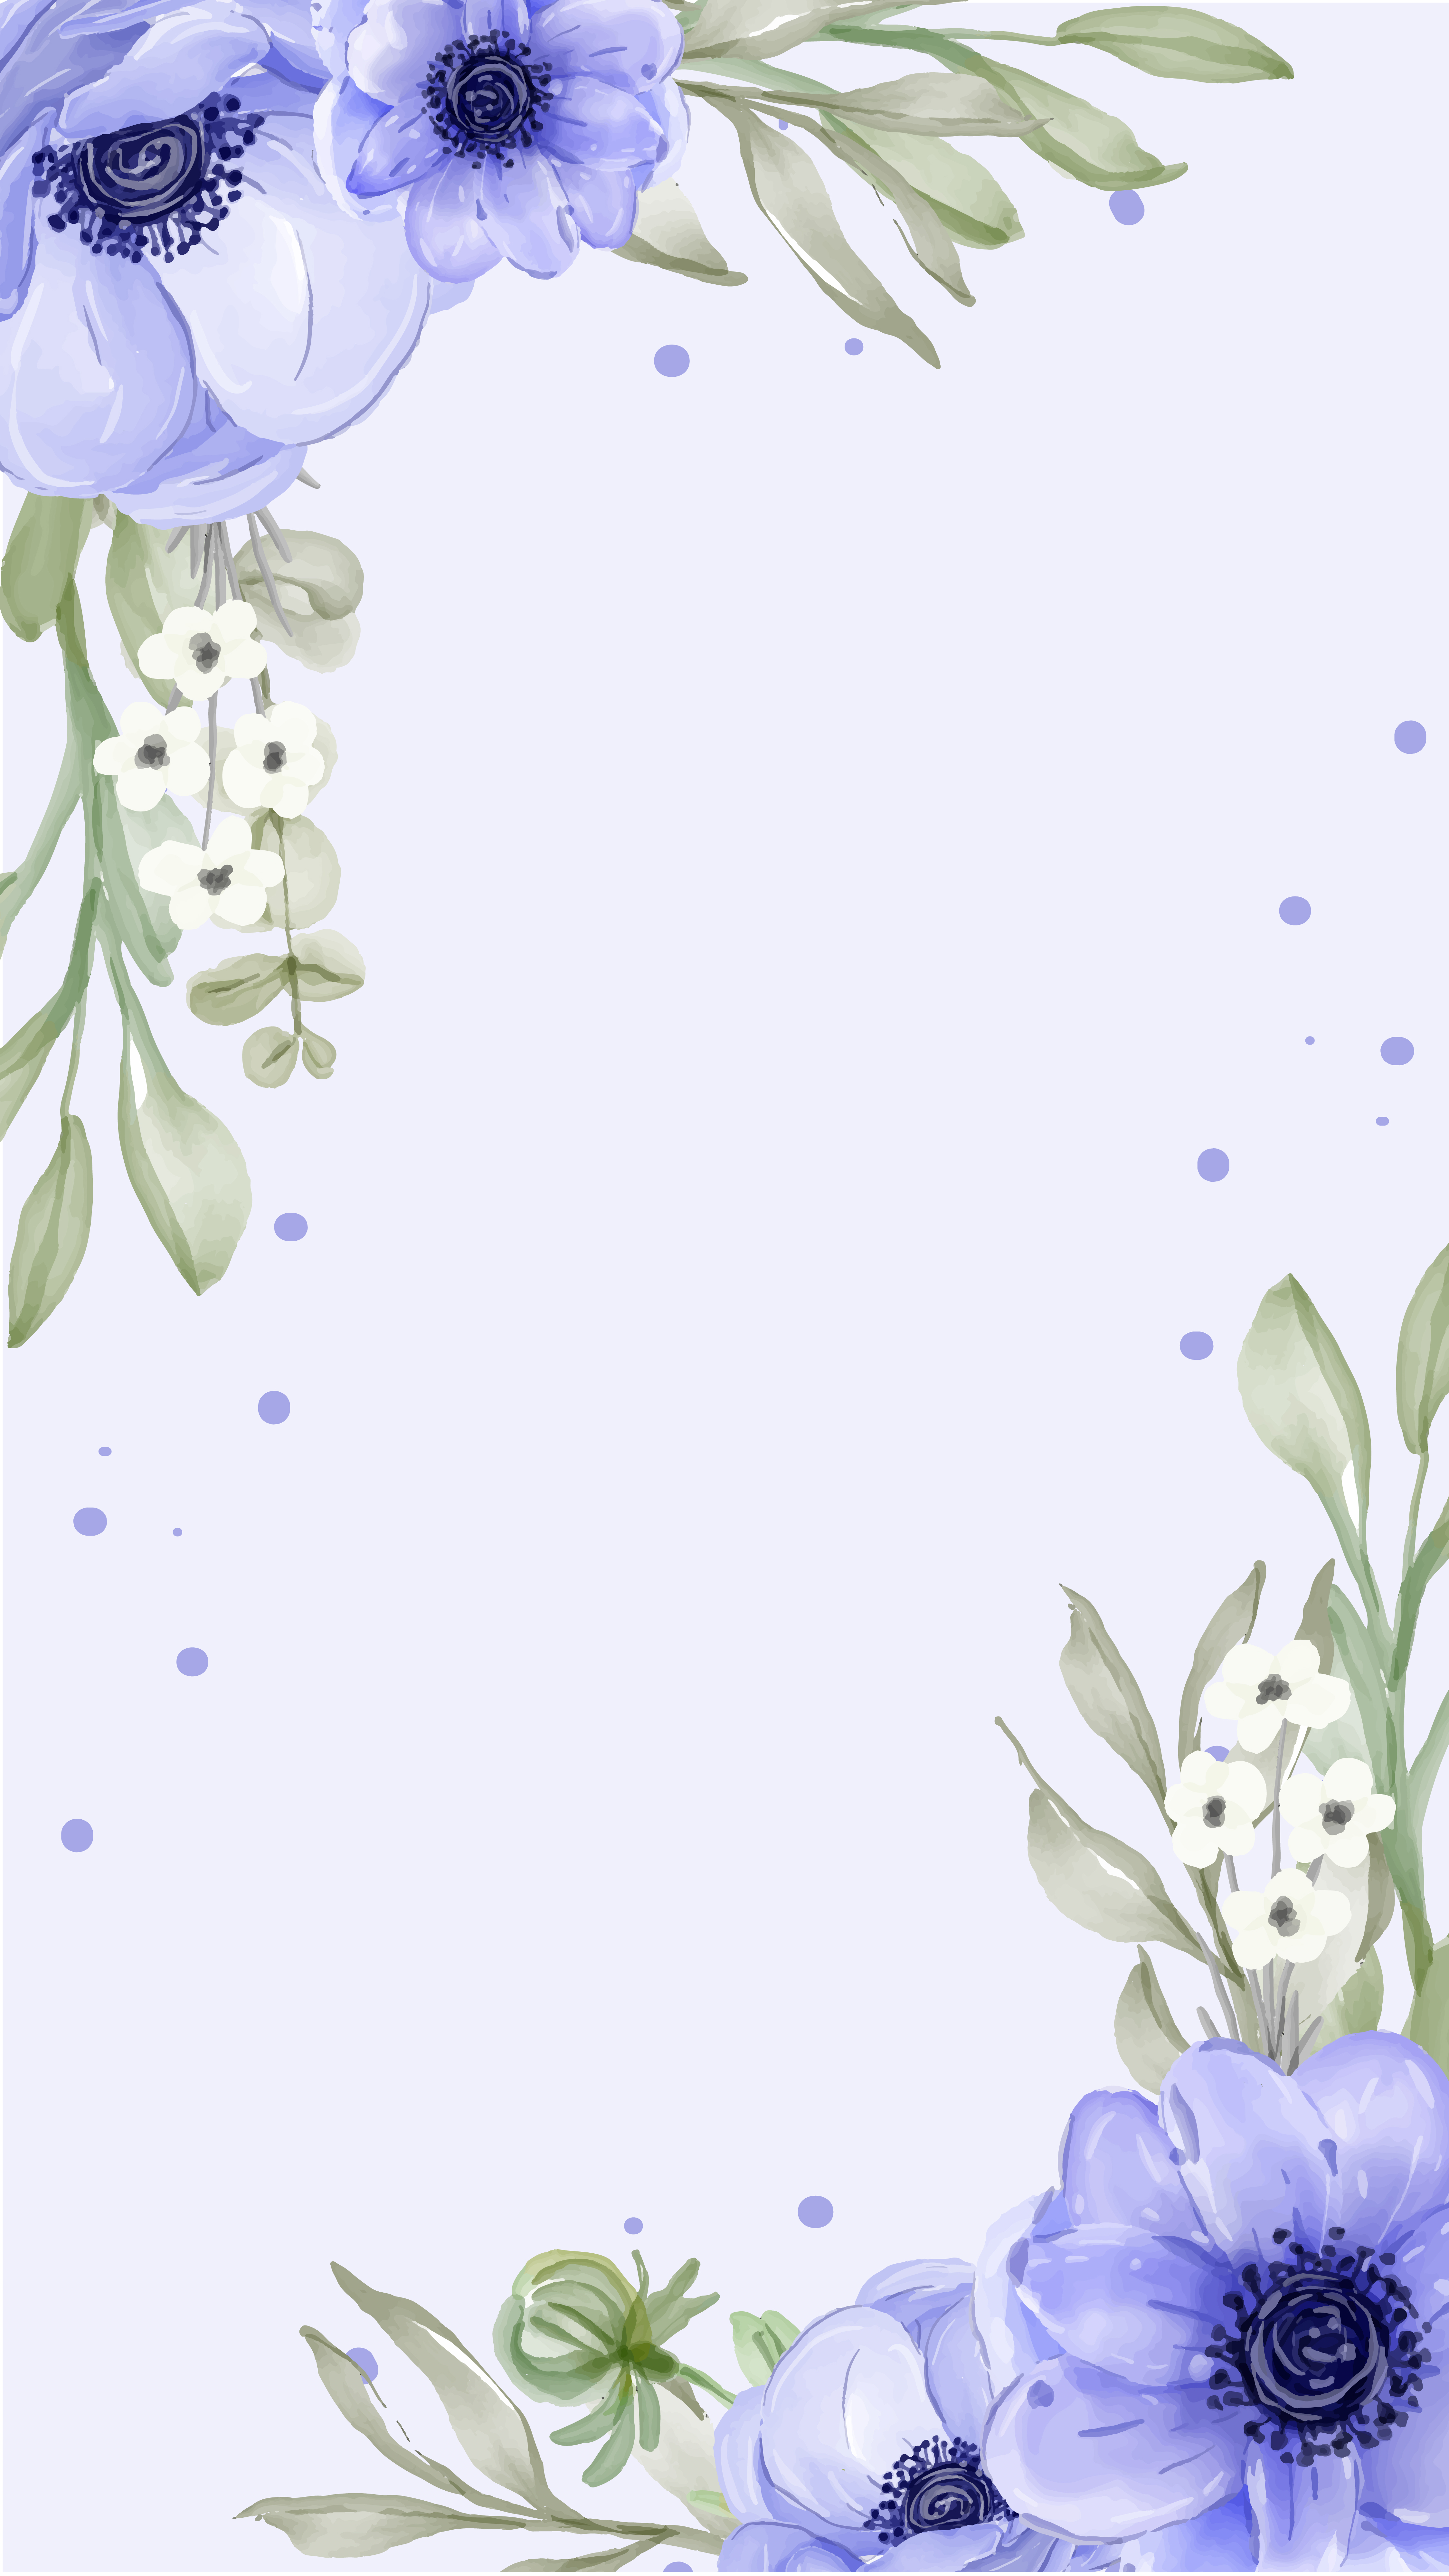 Free Watercolor Purple Floral Background - EPS, Illustrator, JPG, SVG | Template.net